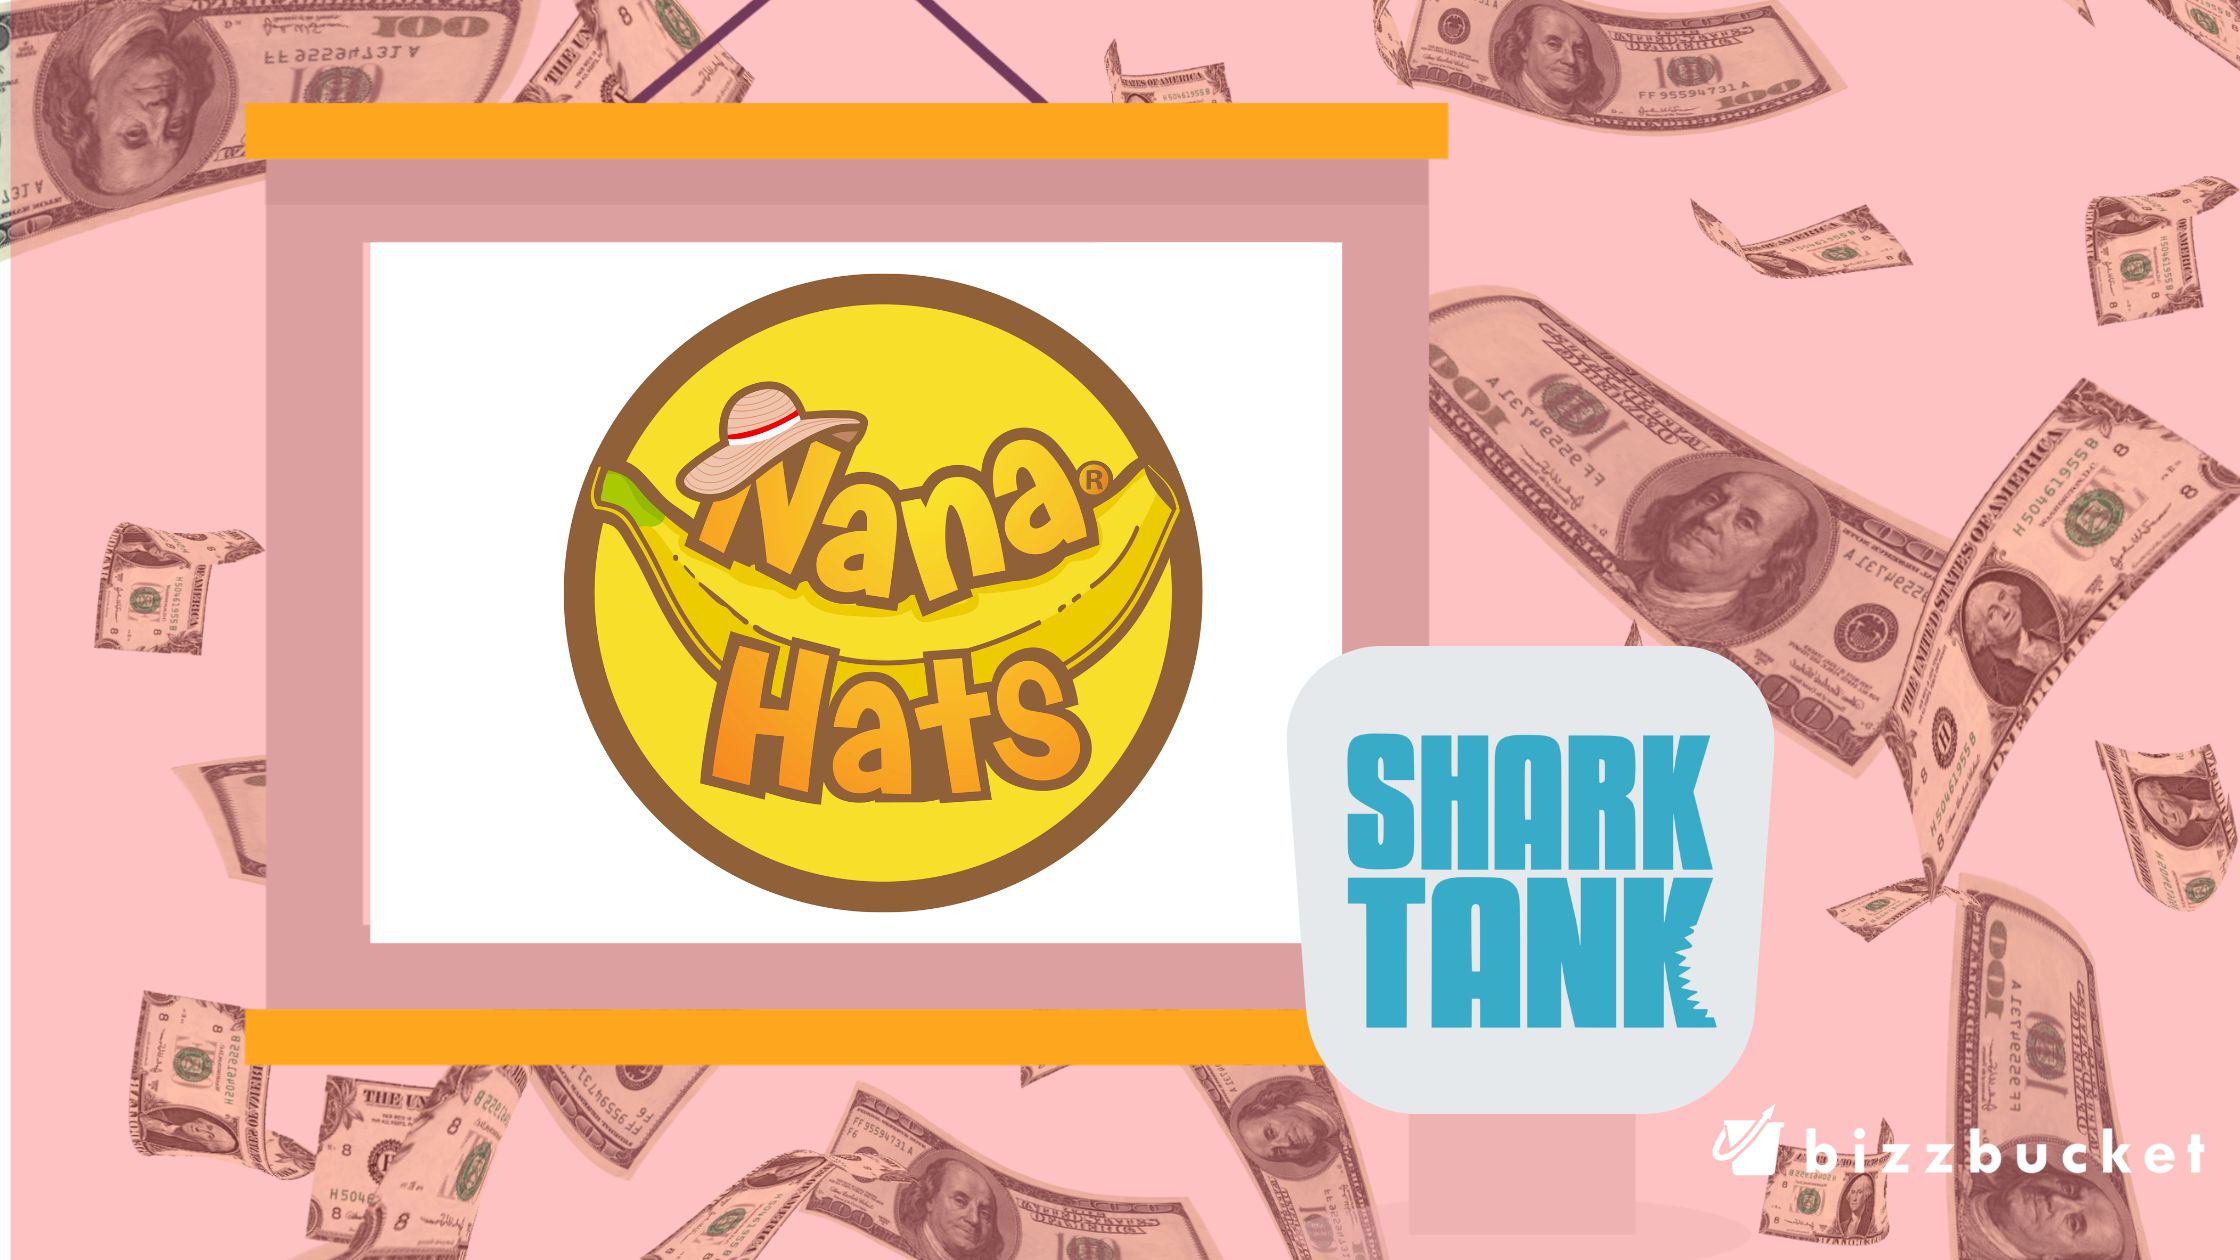 Nana Hats Shark Tank Update